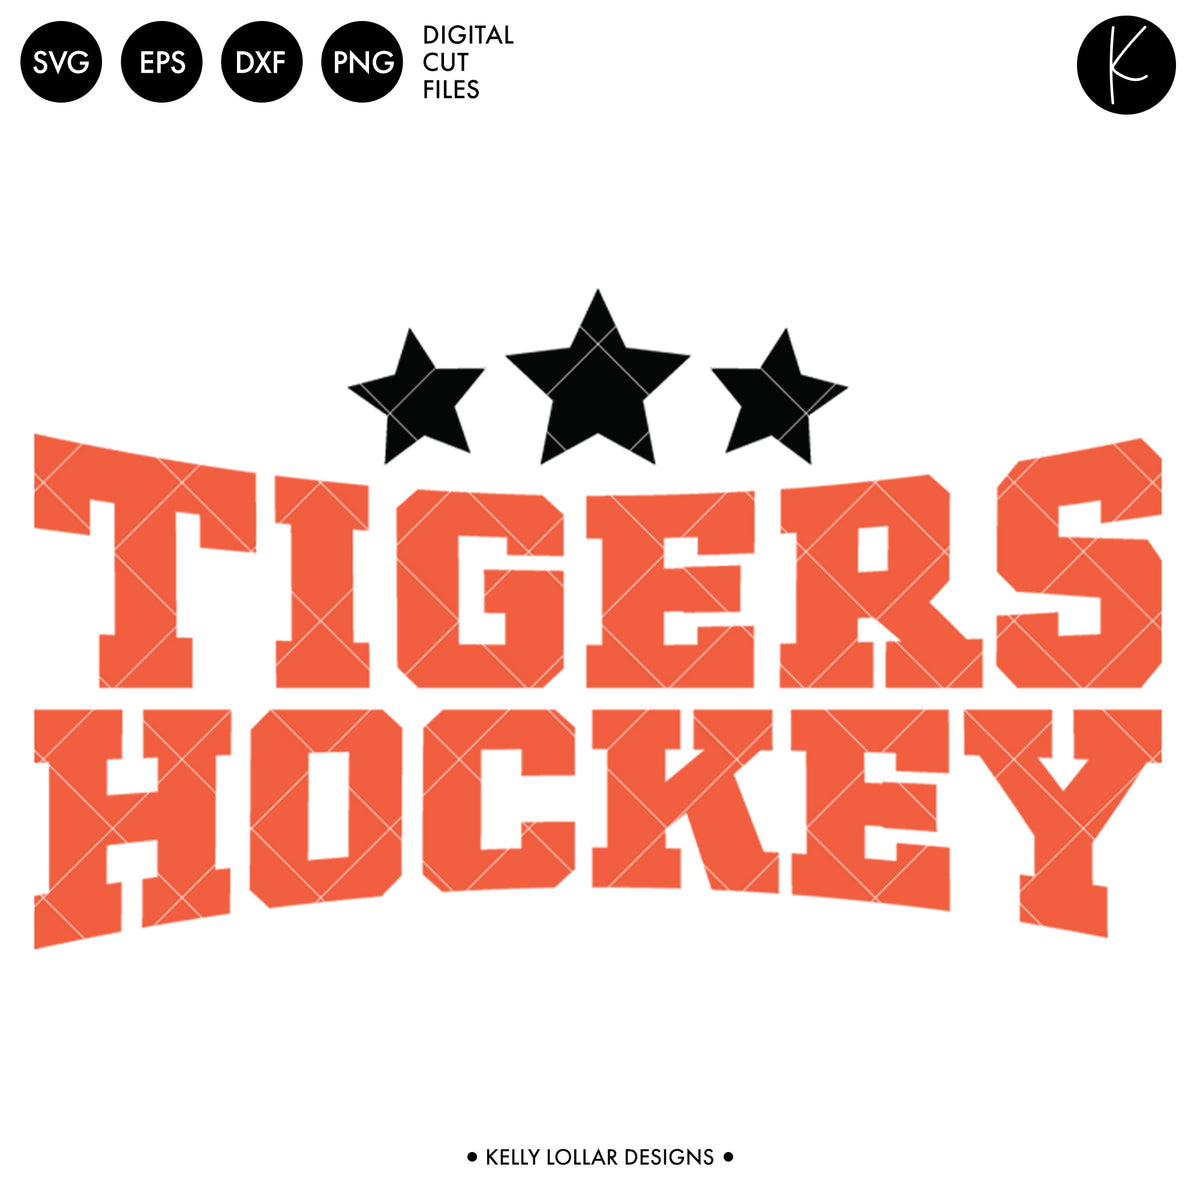 Tigers Hockey Bundle | SVG DXF EPS PNG Cut Files